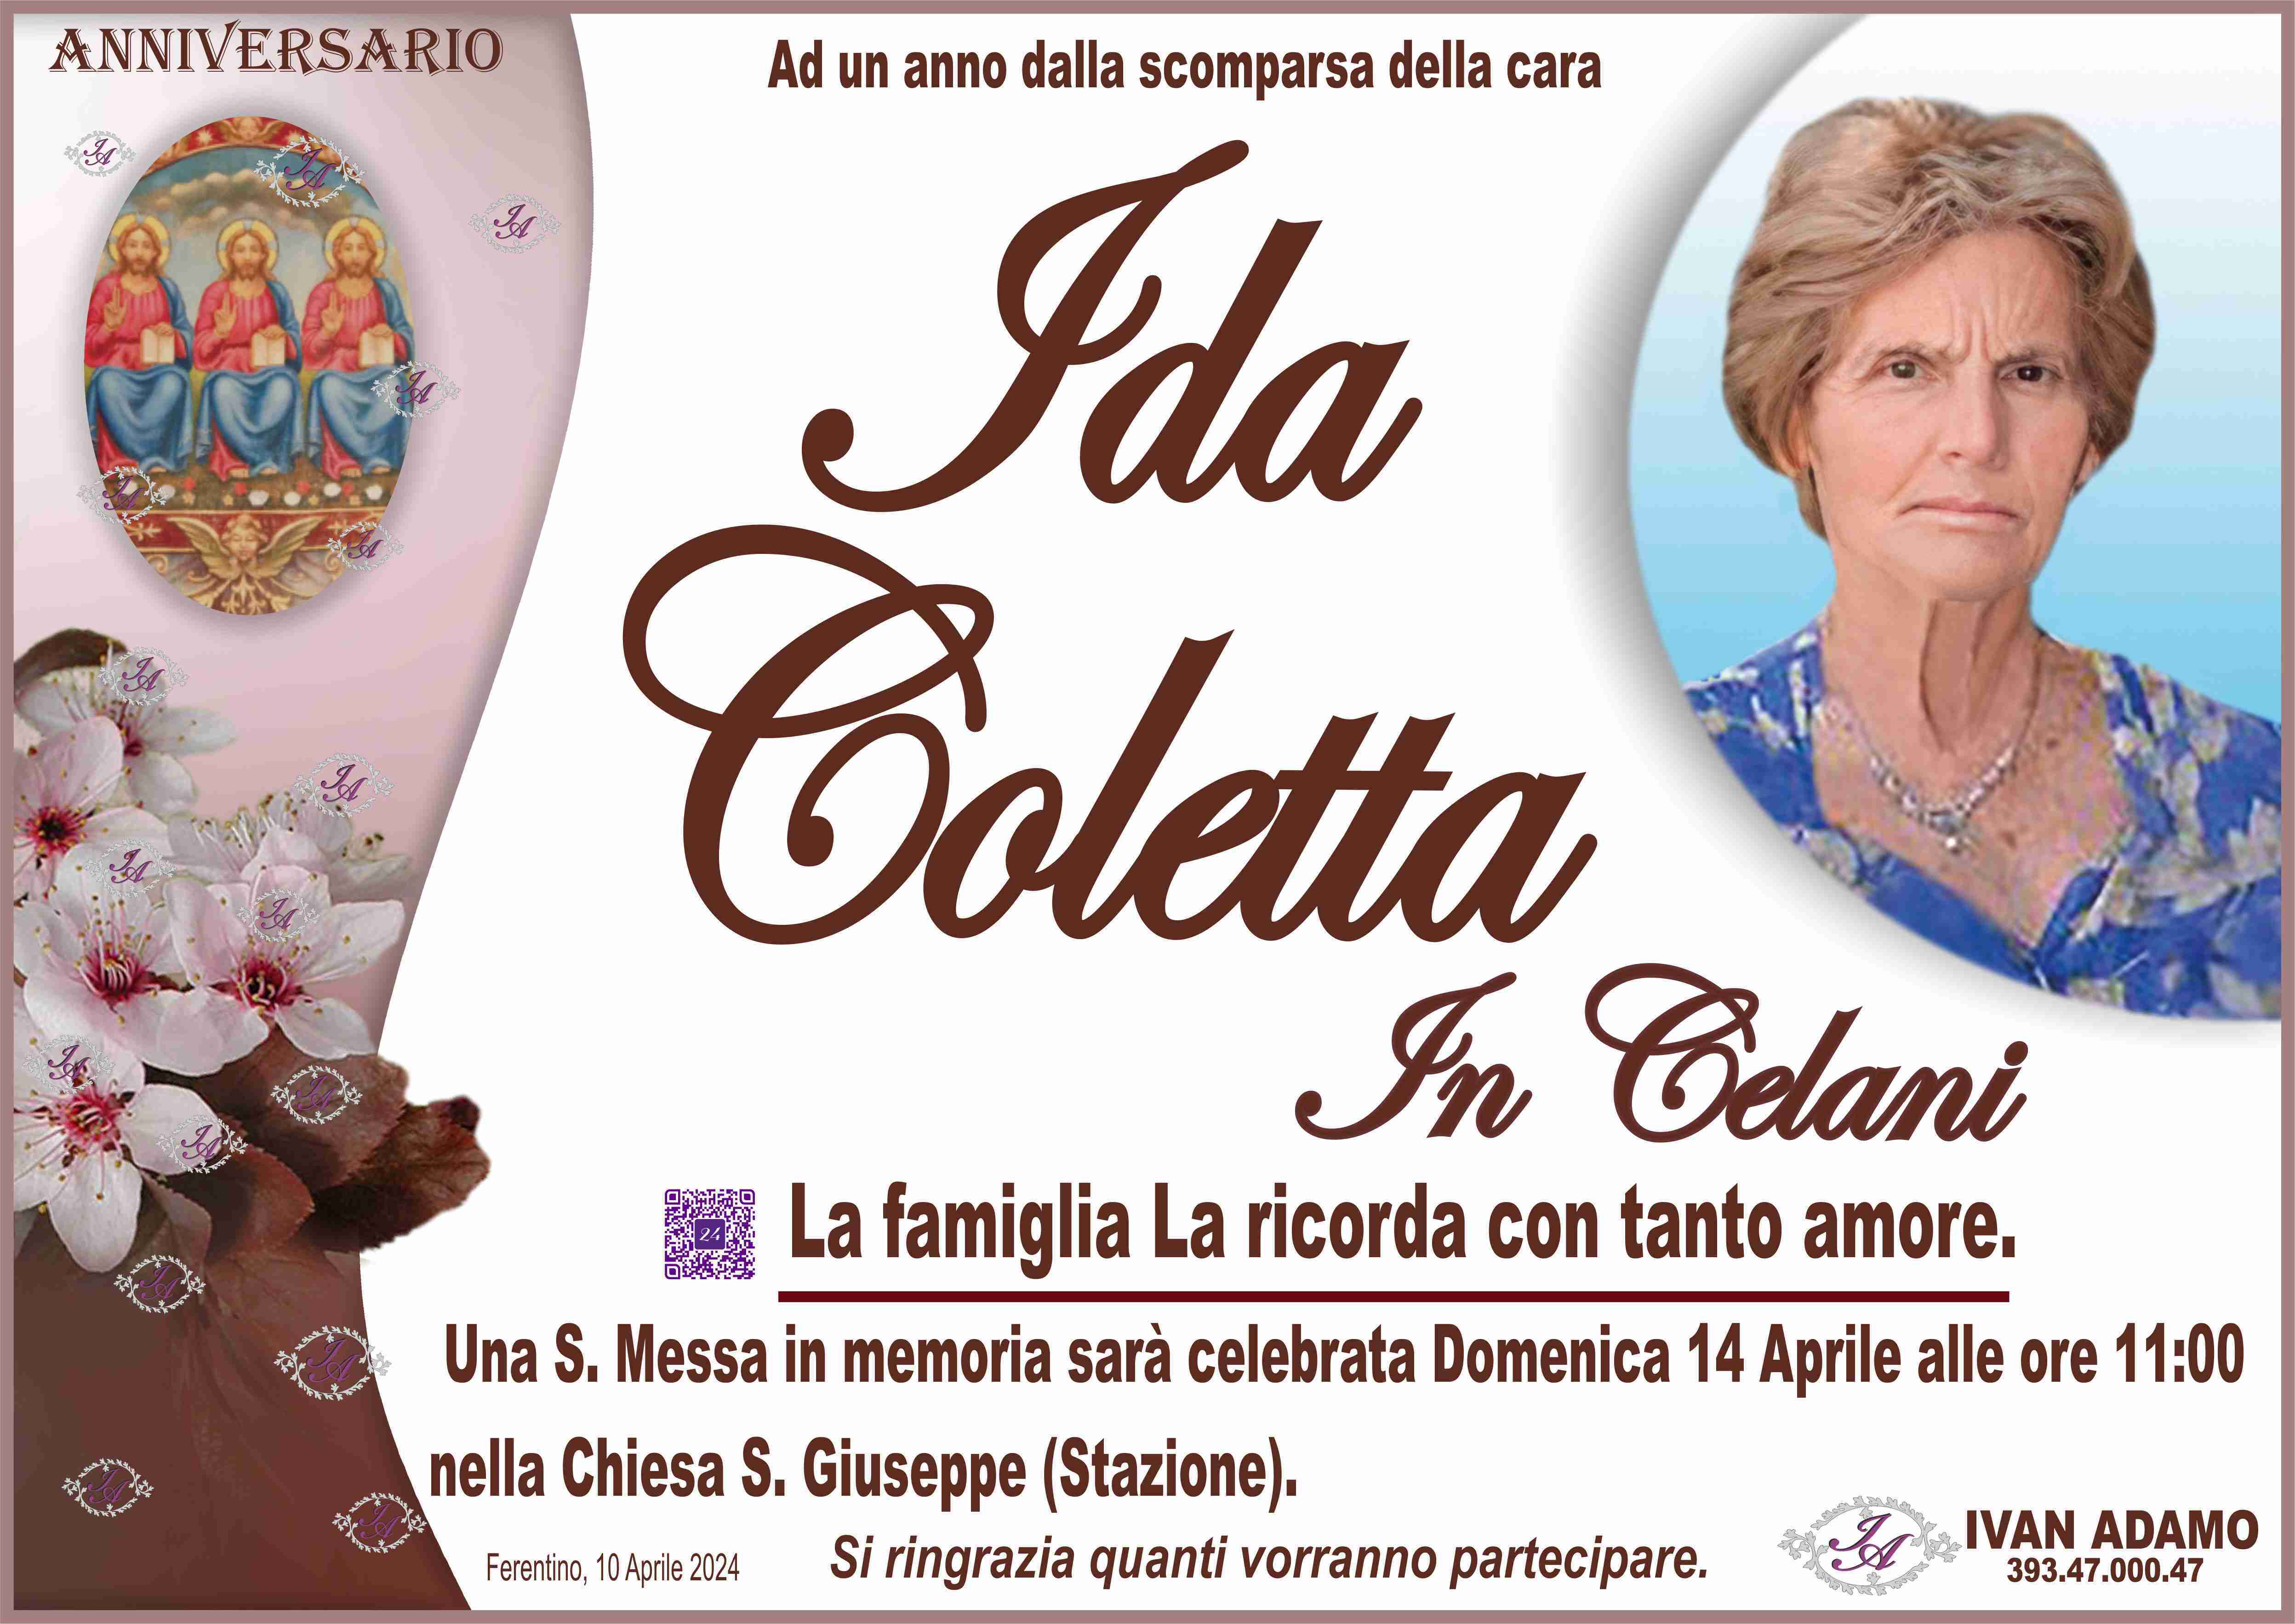 Ida Coletta